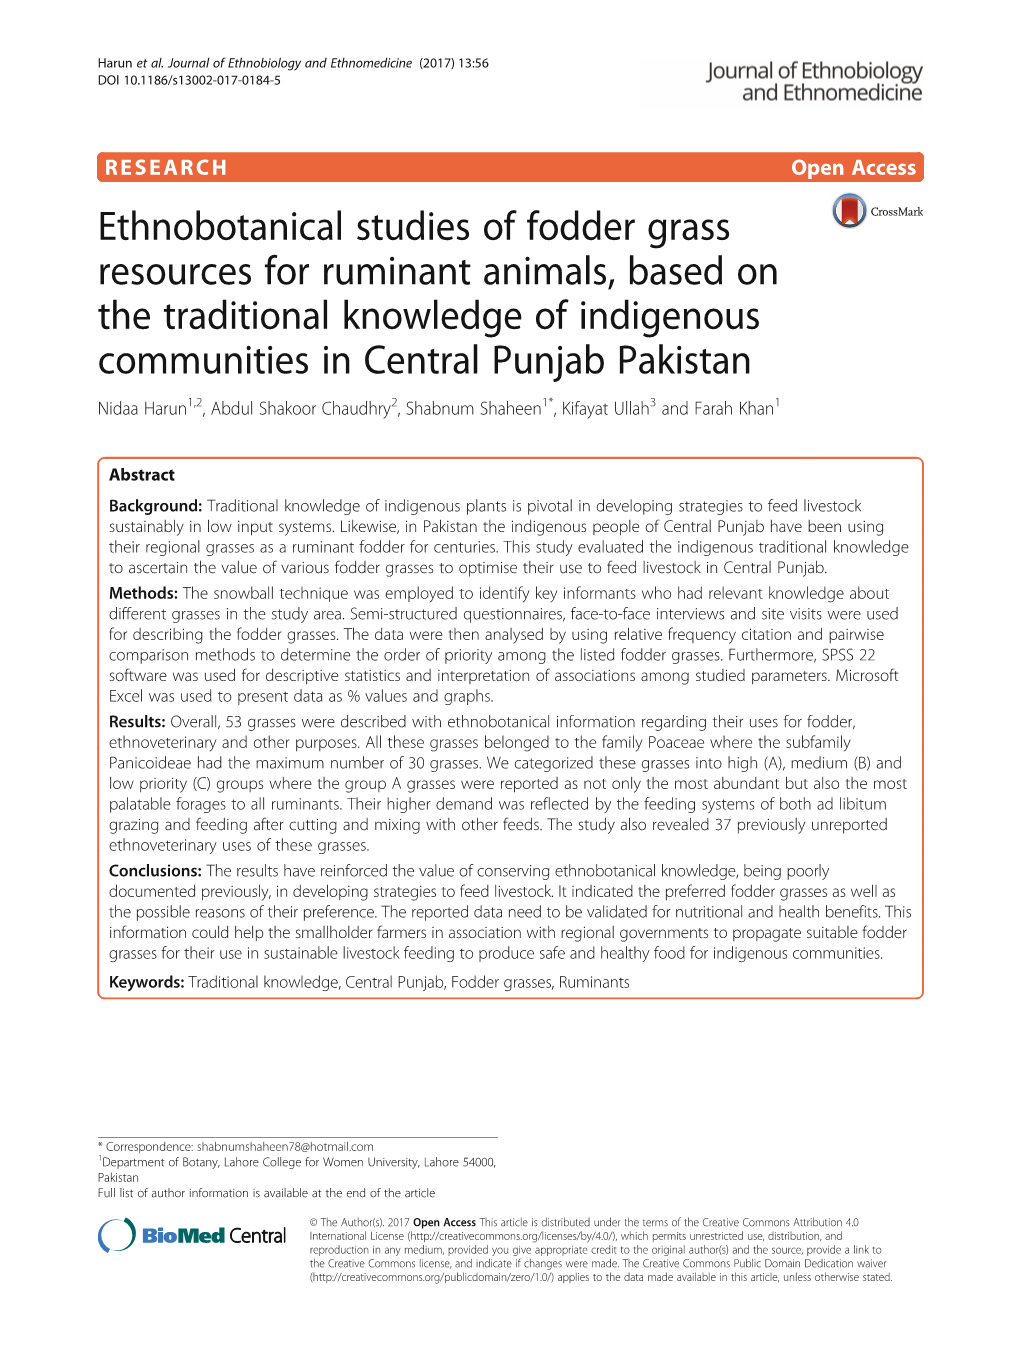 Ethnobotanical Studies of Fodder Grass Resources for Ruminant Animals